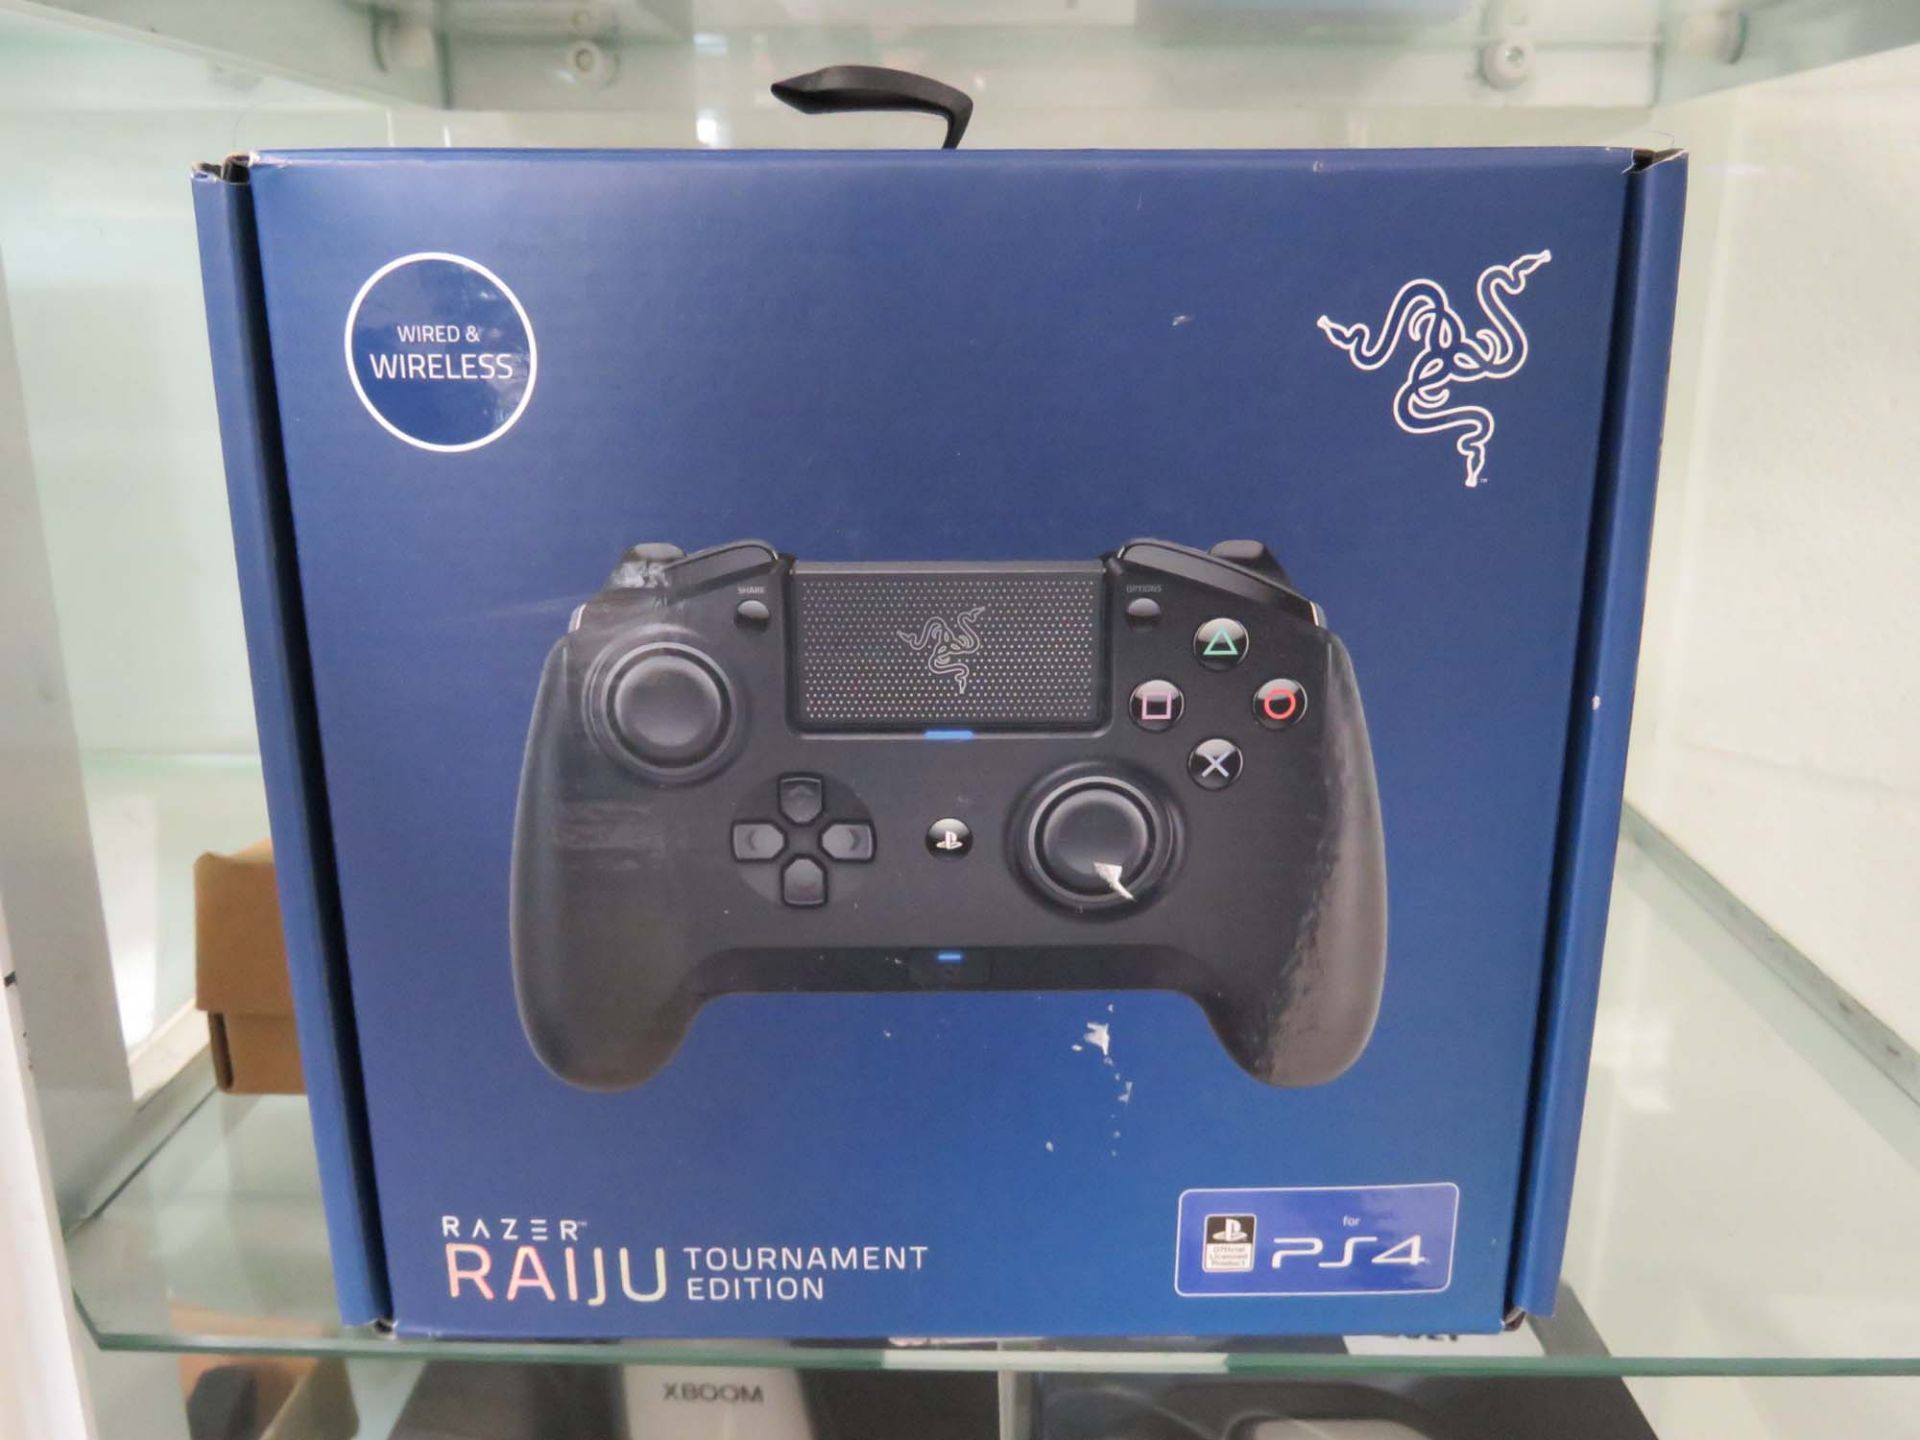 Razer Raiju Tournament Edition PlayStation 4 controller with box